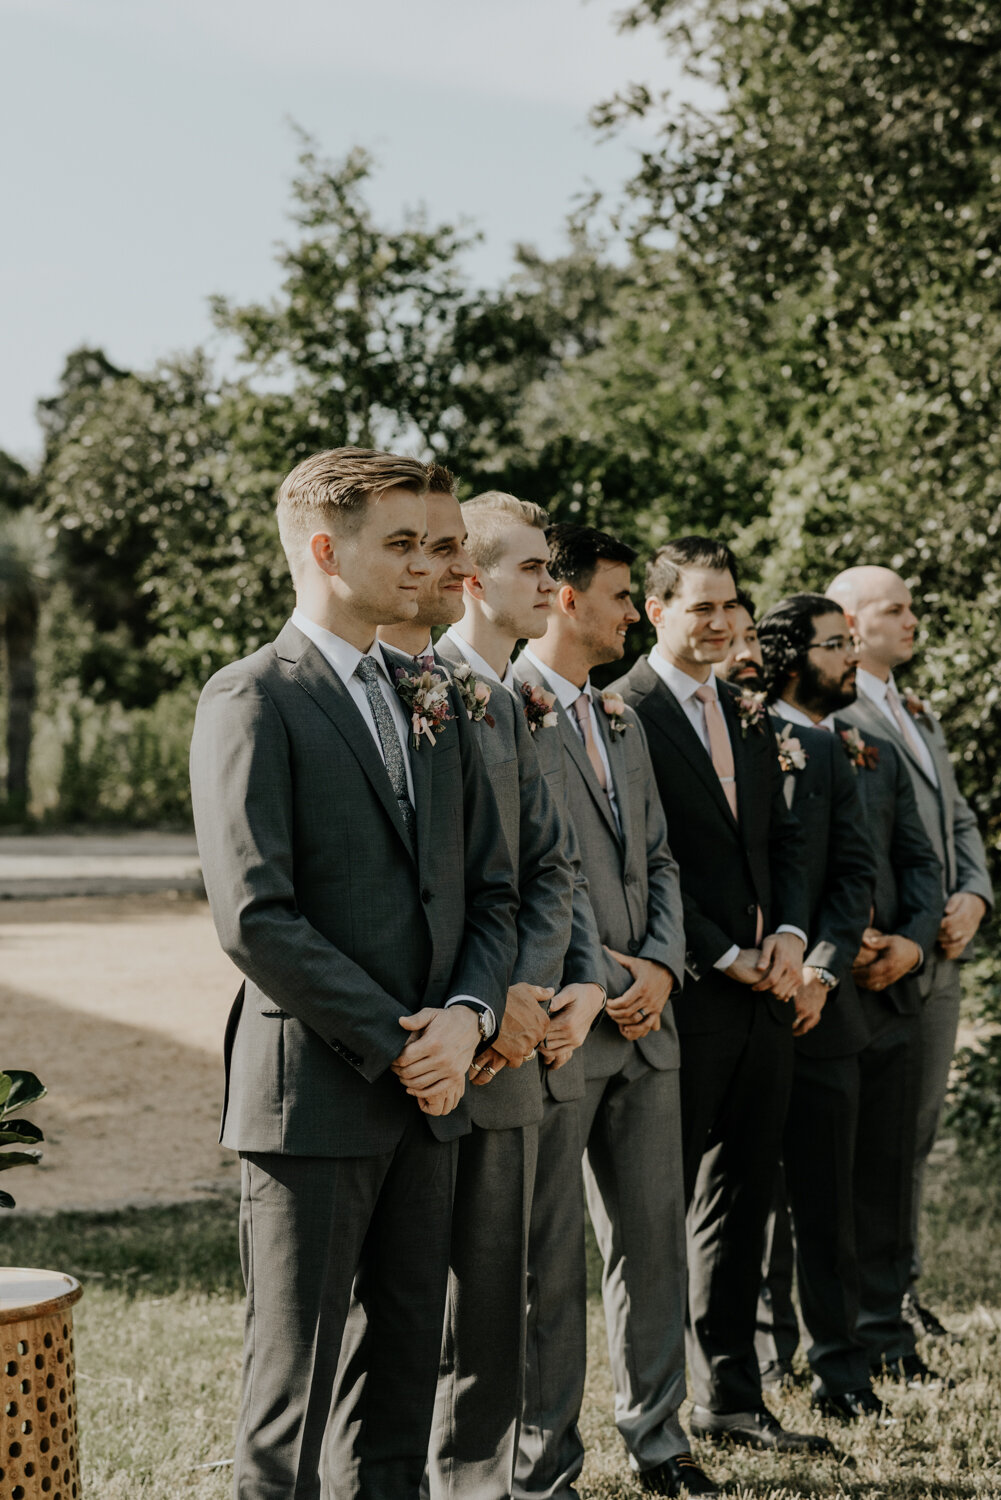 Wedding Ceremony Photos in Austin, Texas